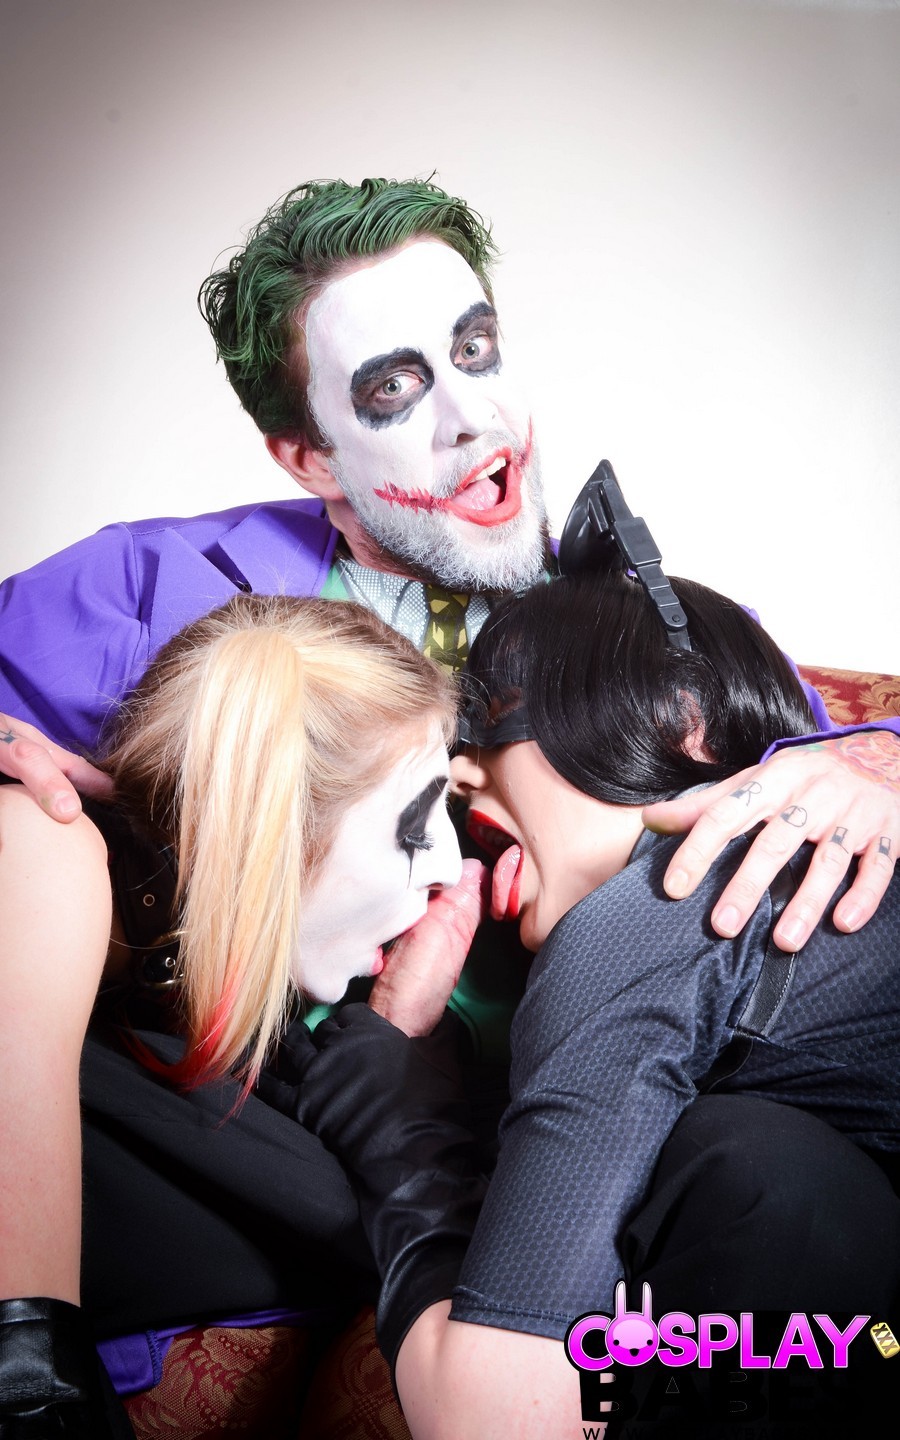 Le Joker cosplay à trois avec Jessica Jensen et Tina Kay.
 #75733865